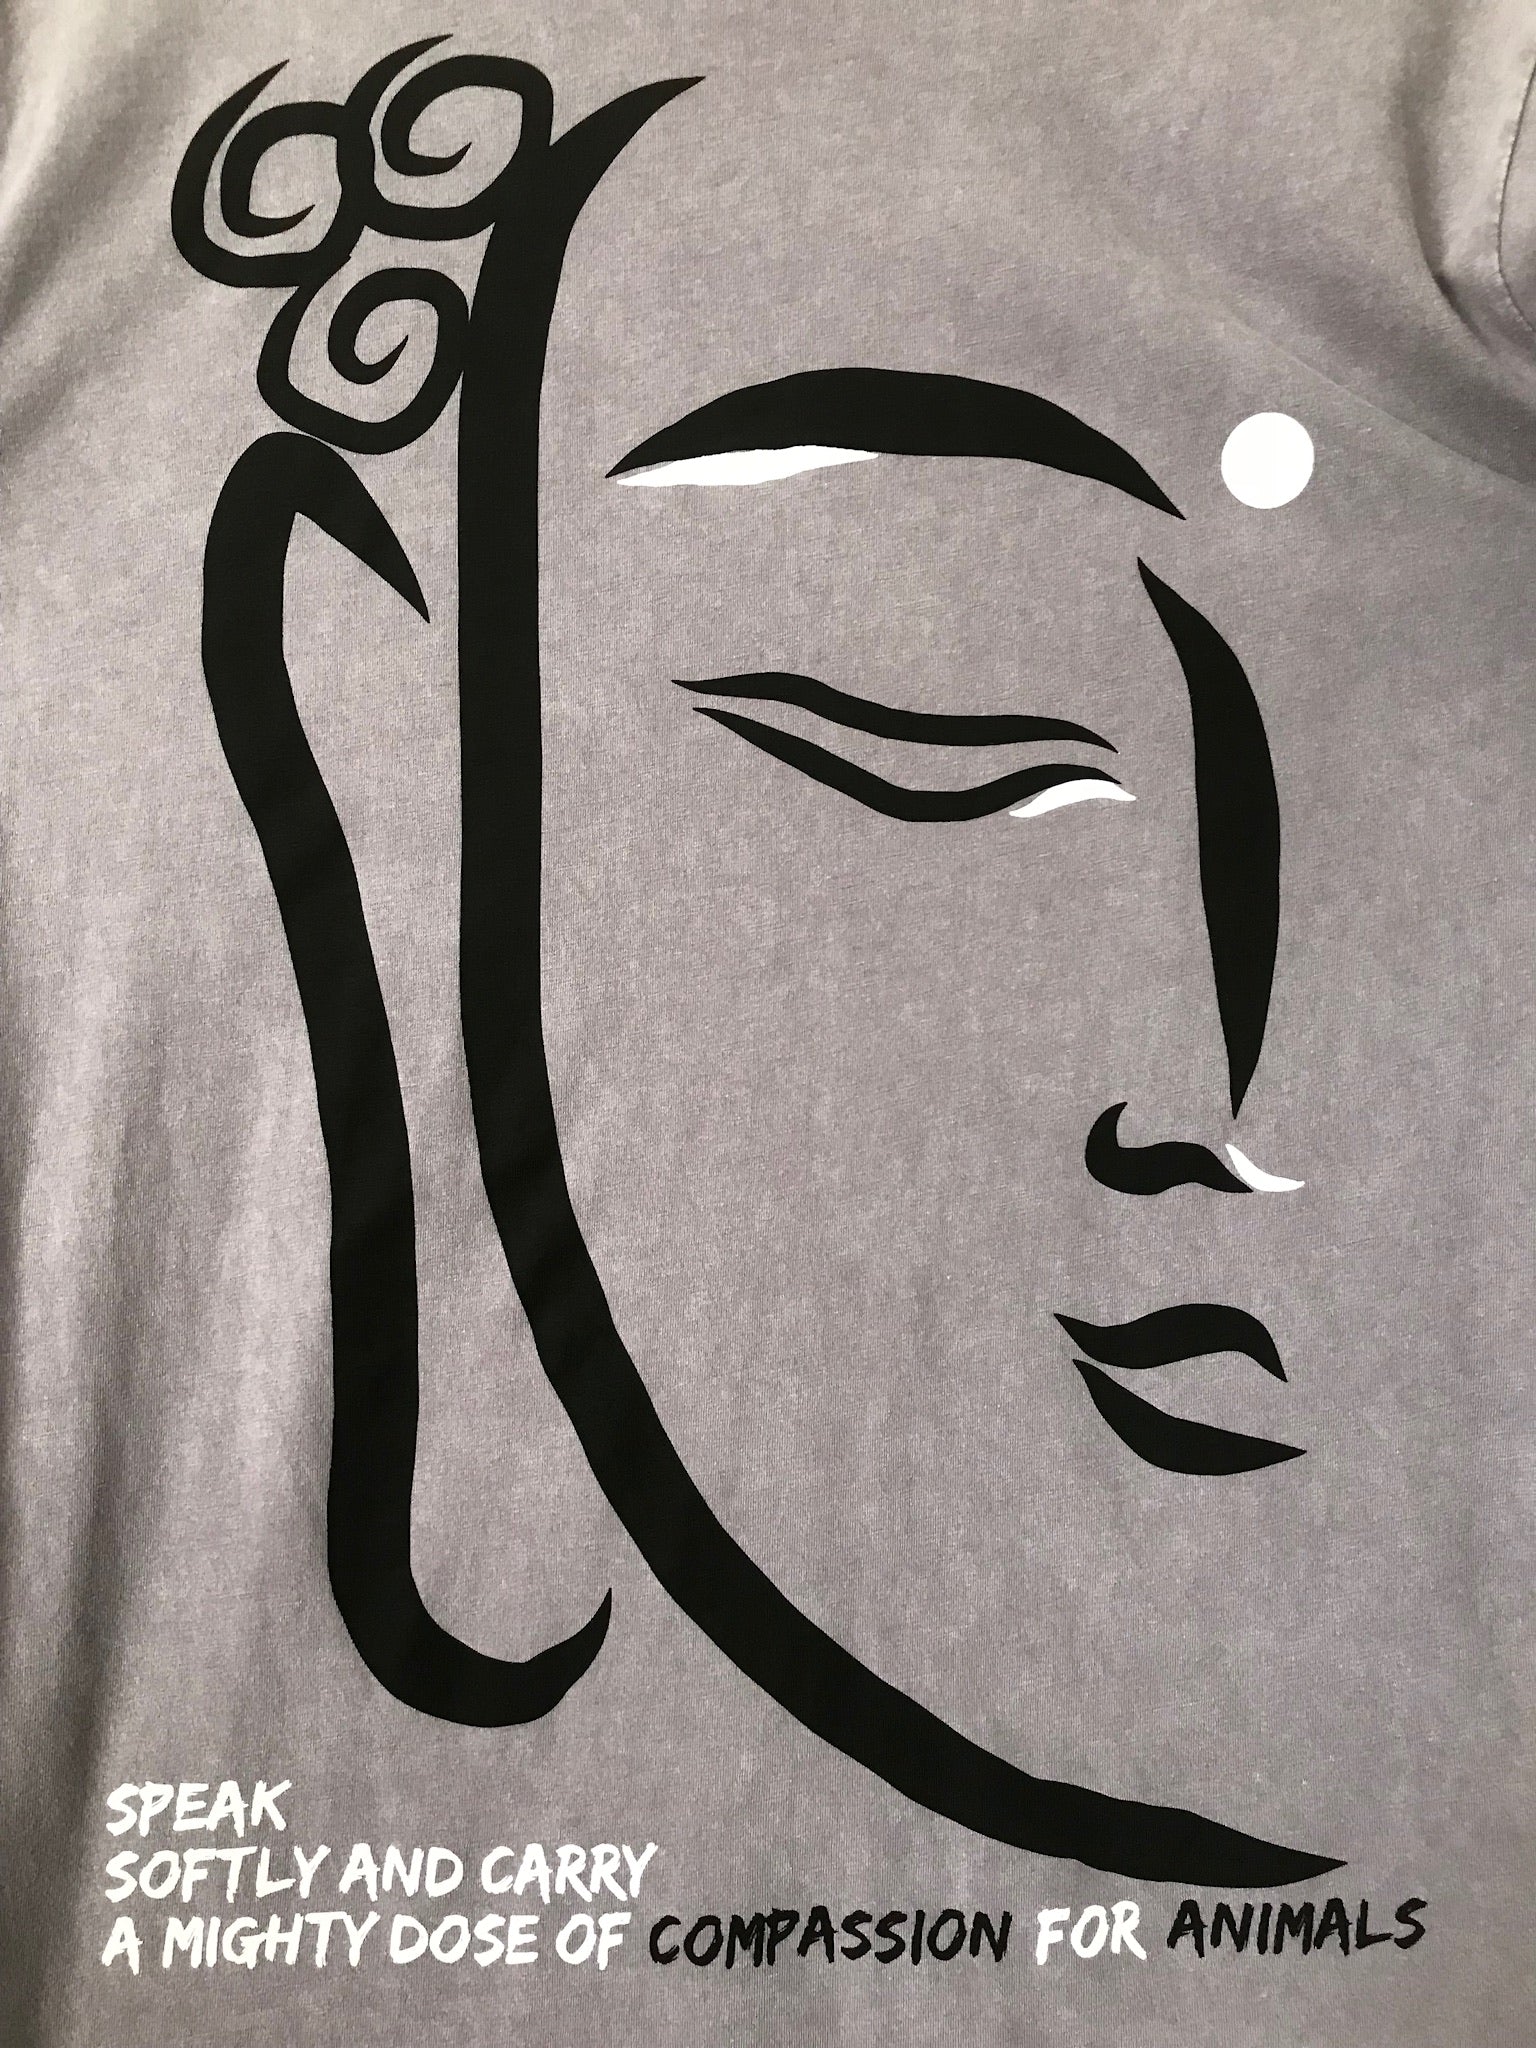 Buddha, love, compassion, vegan, fashion, animal rights